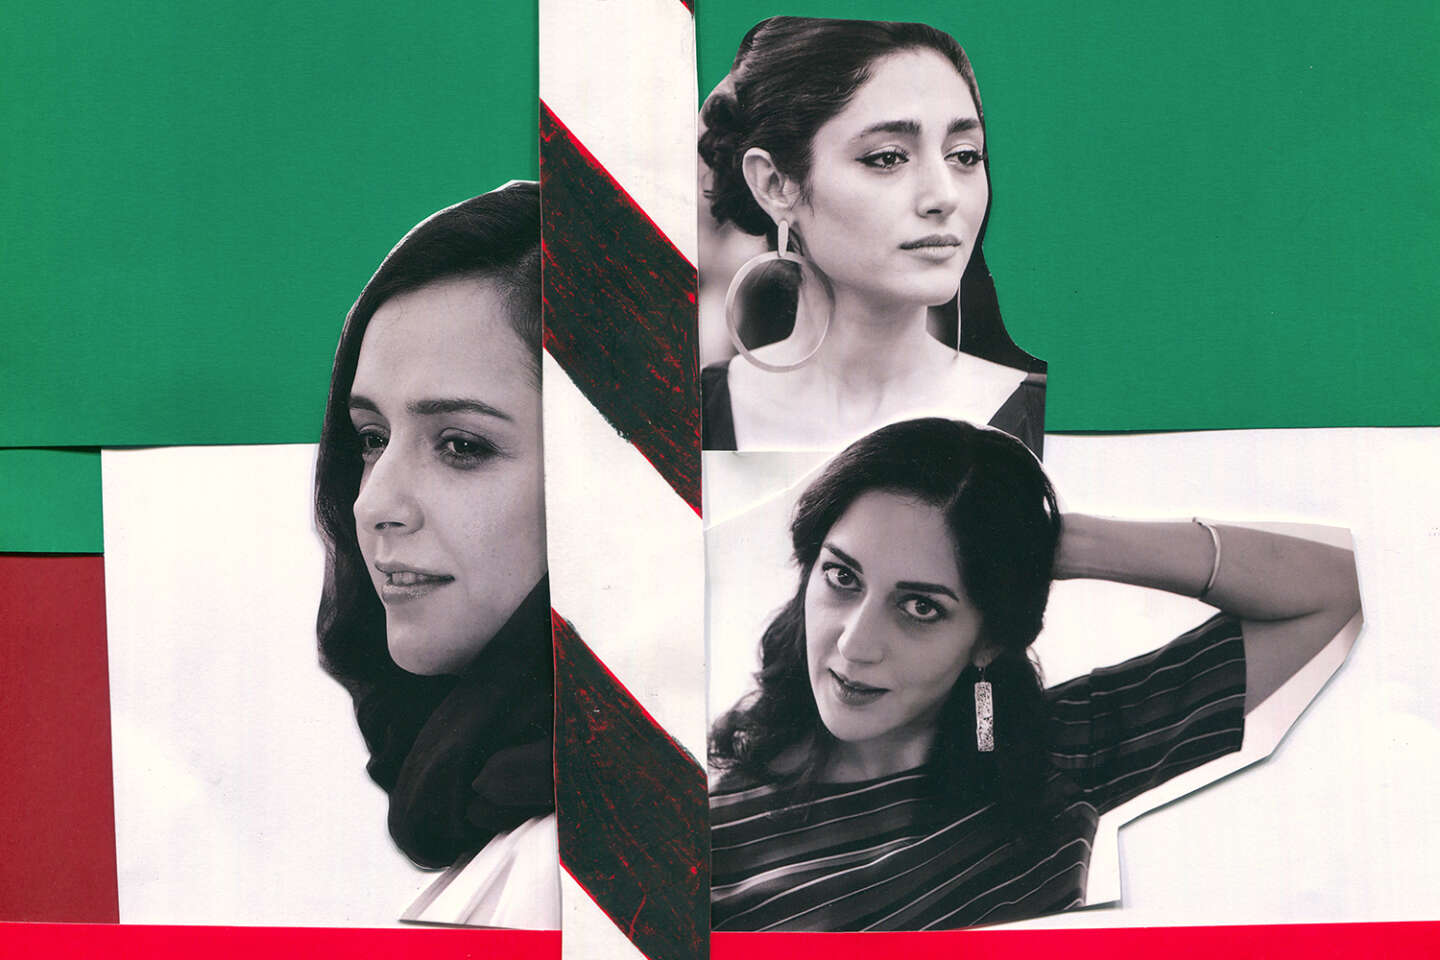 Sex Video Irani School Girls - Golshifteh Farahani, Taraneh Alidoosti and Zar Amir Ebrahimi, three Iranian  women on the Cannes red carpet